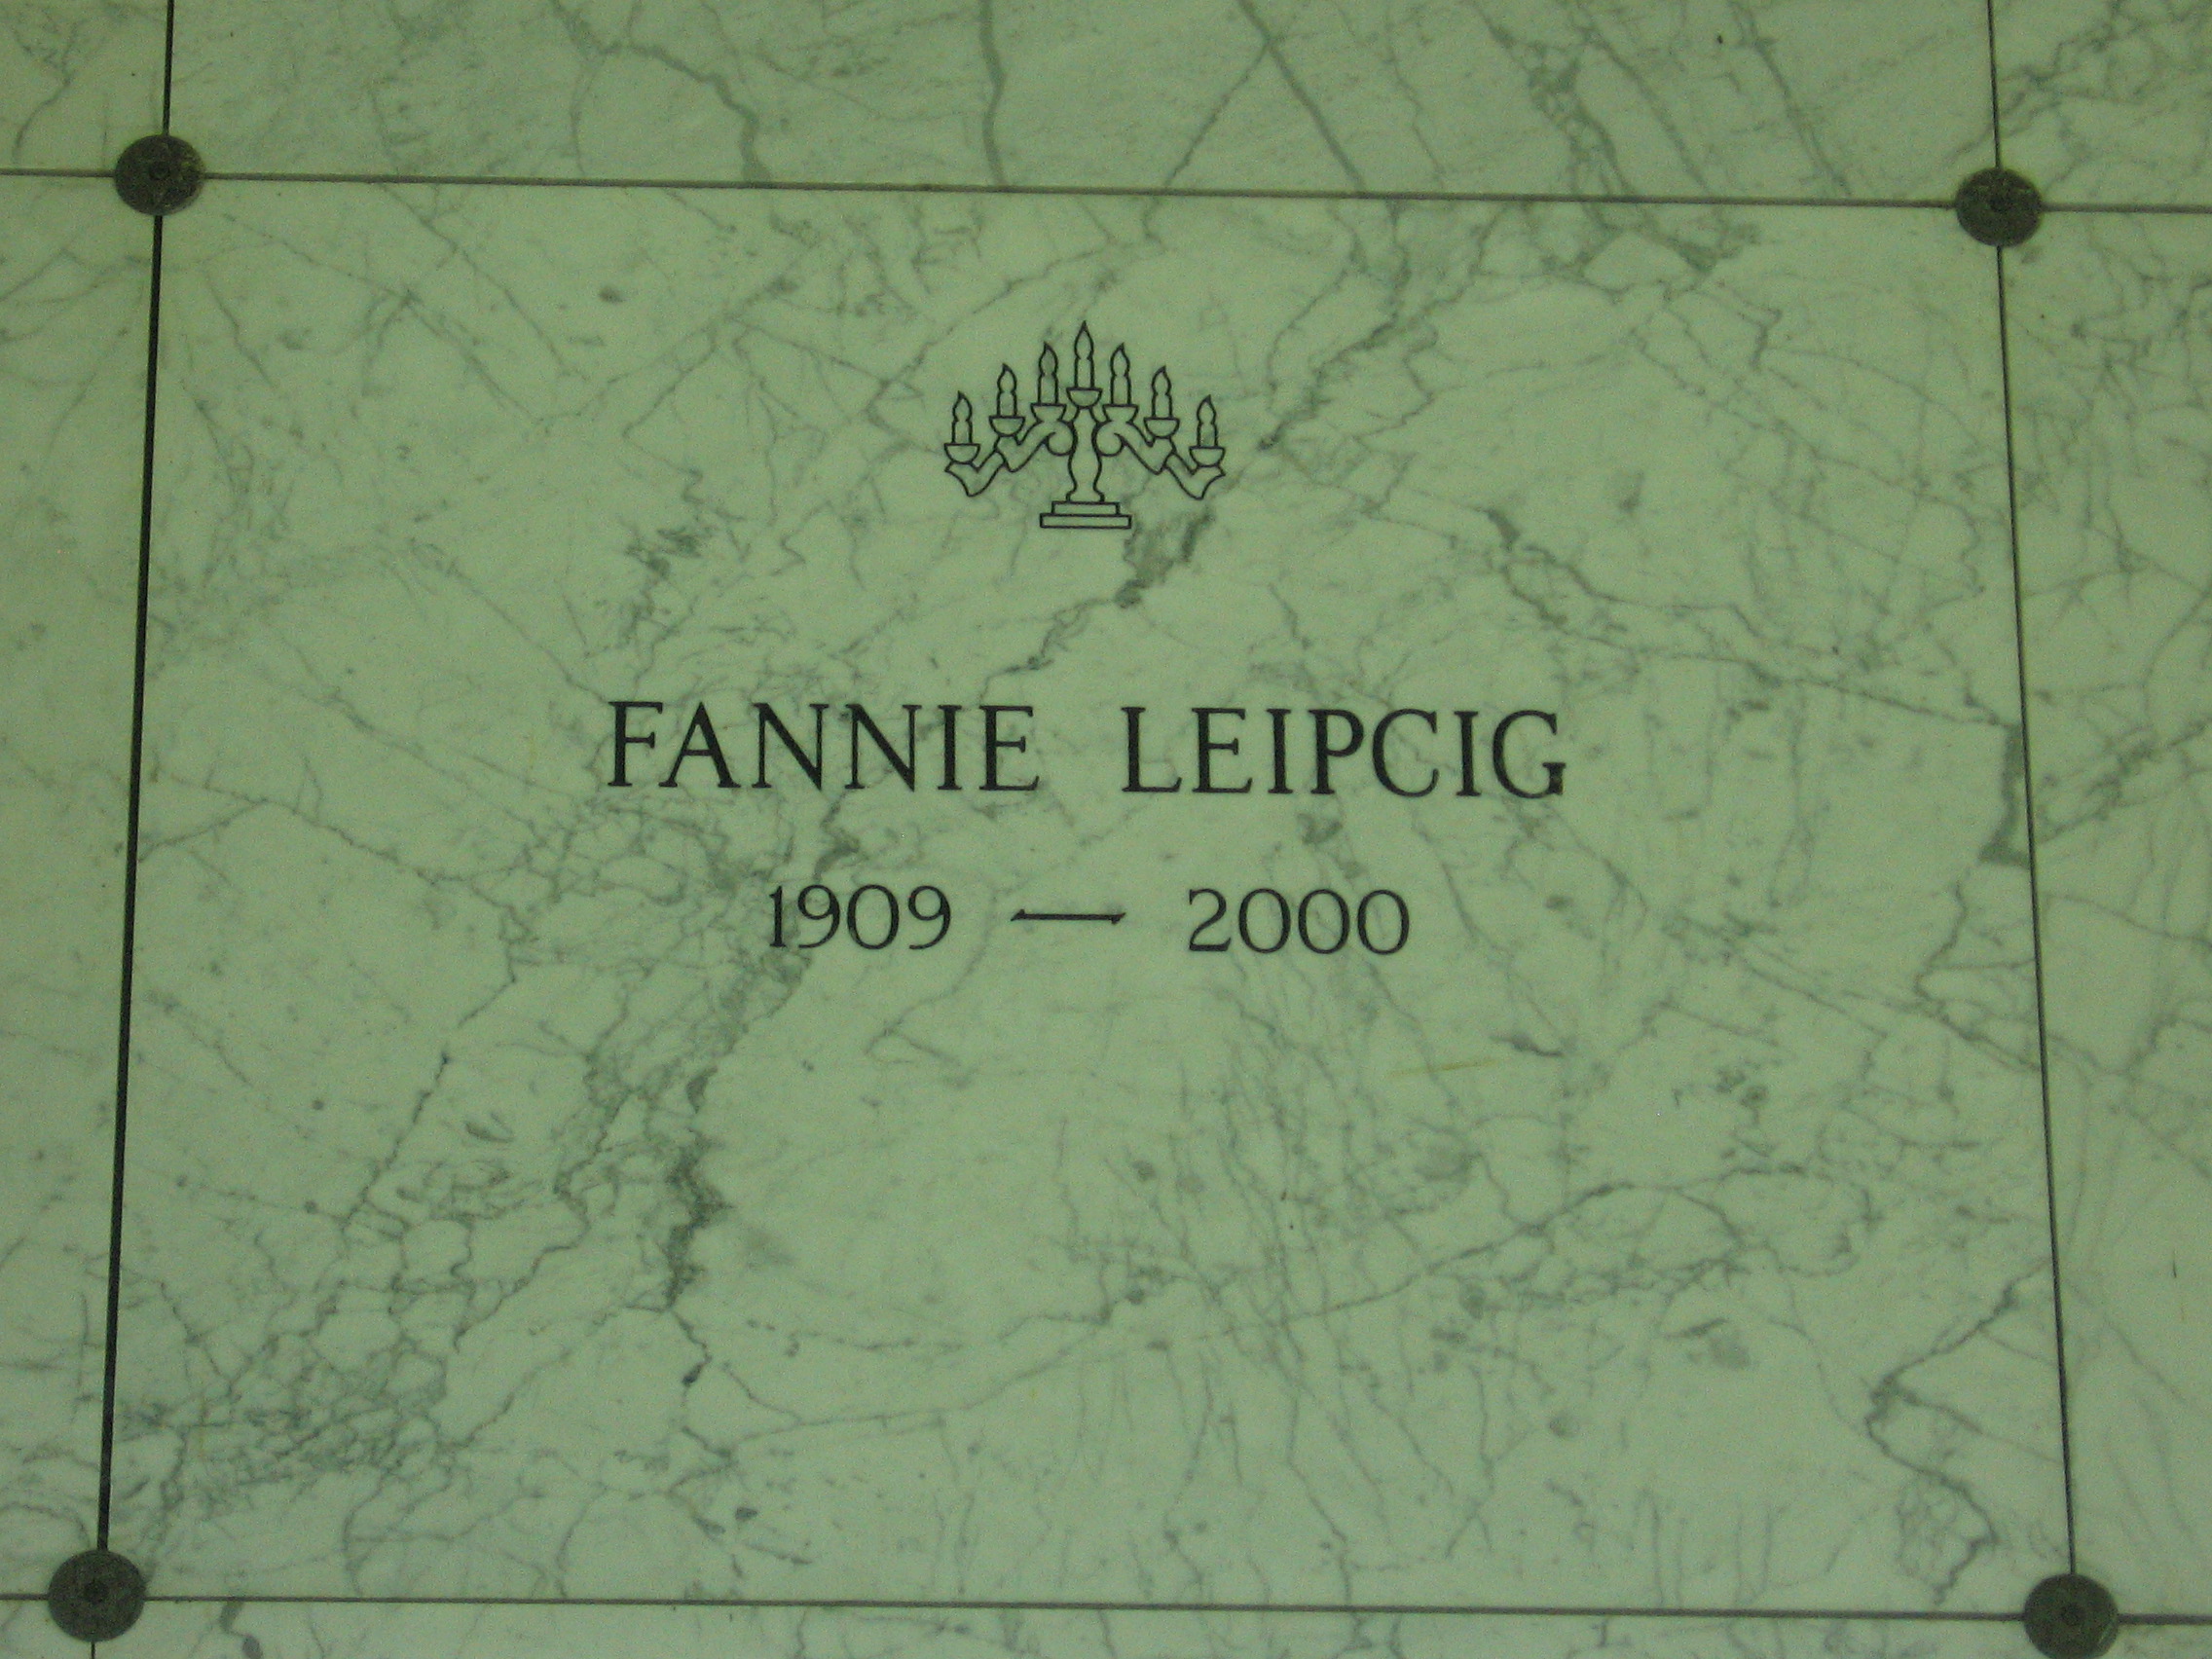 Fannie Leipcig